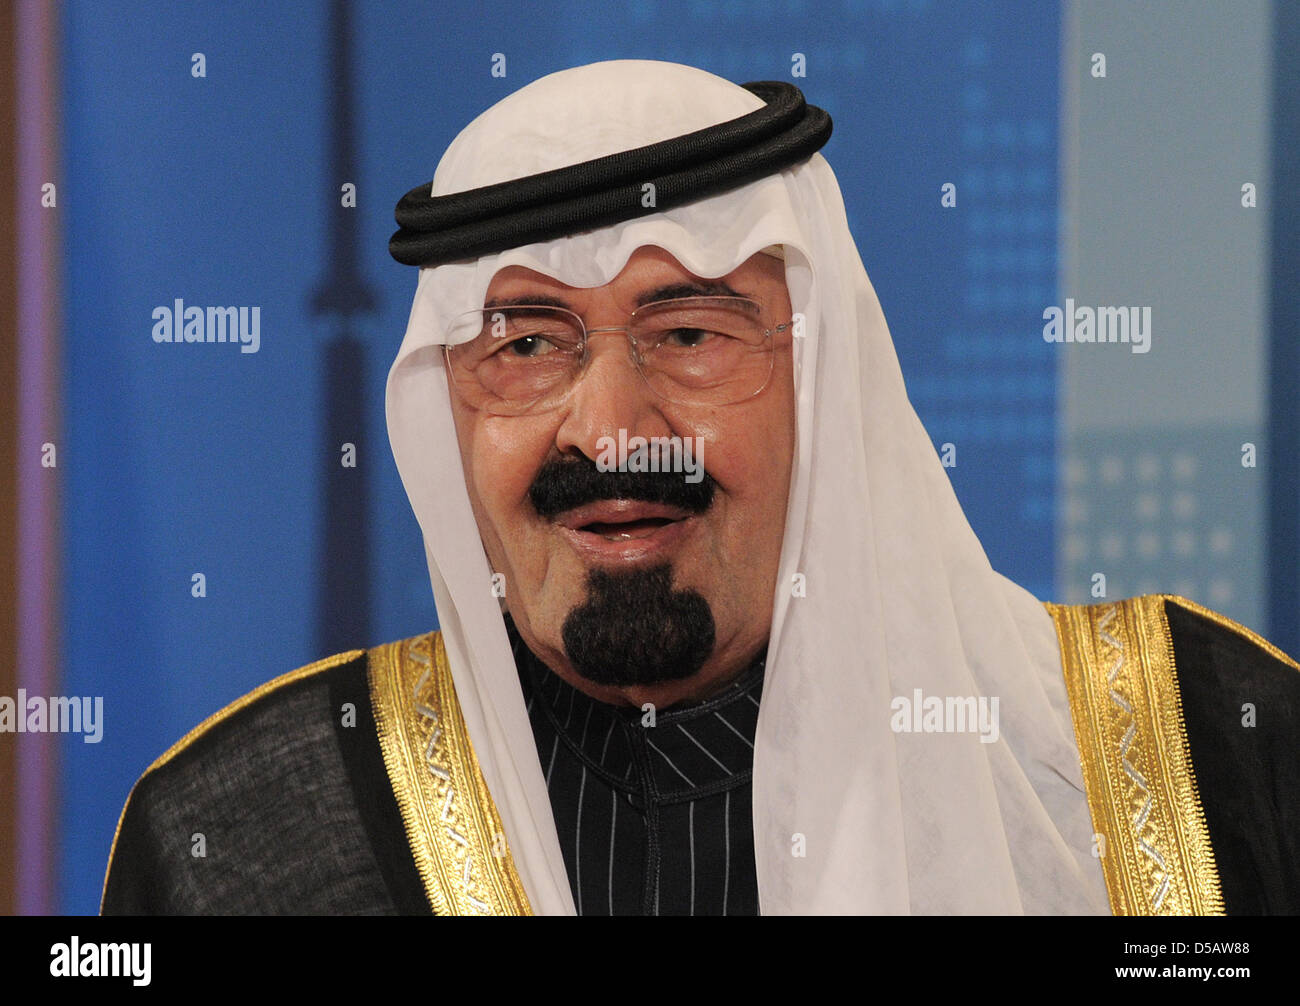 King Abdullah bin Abdulaziz Al Saud of Saudi Arabia pictured at the G20 summit in Toronto, Canada, 26 June 2010. Photo: Peer Grimm Stock Photo